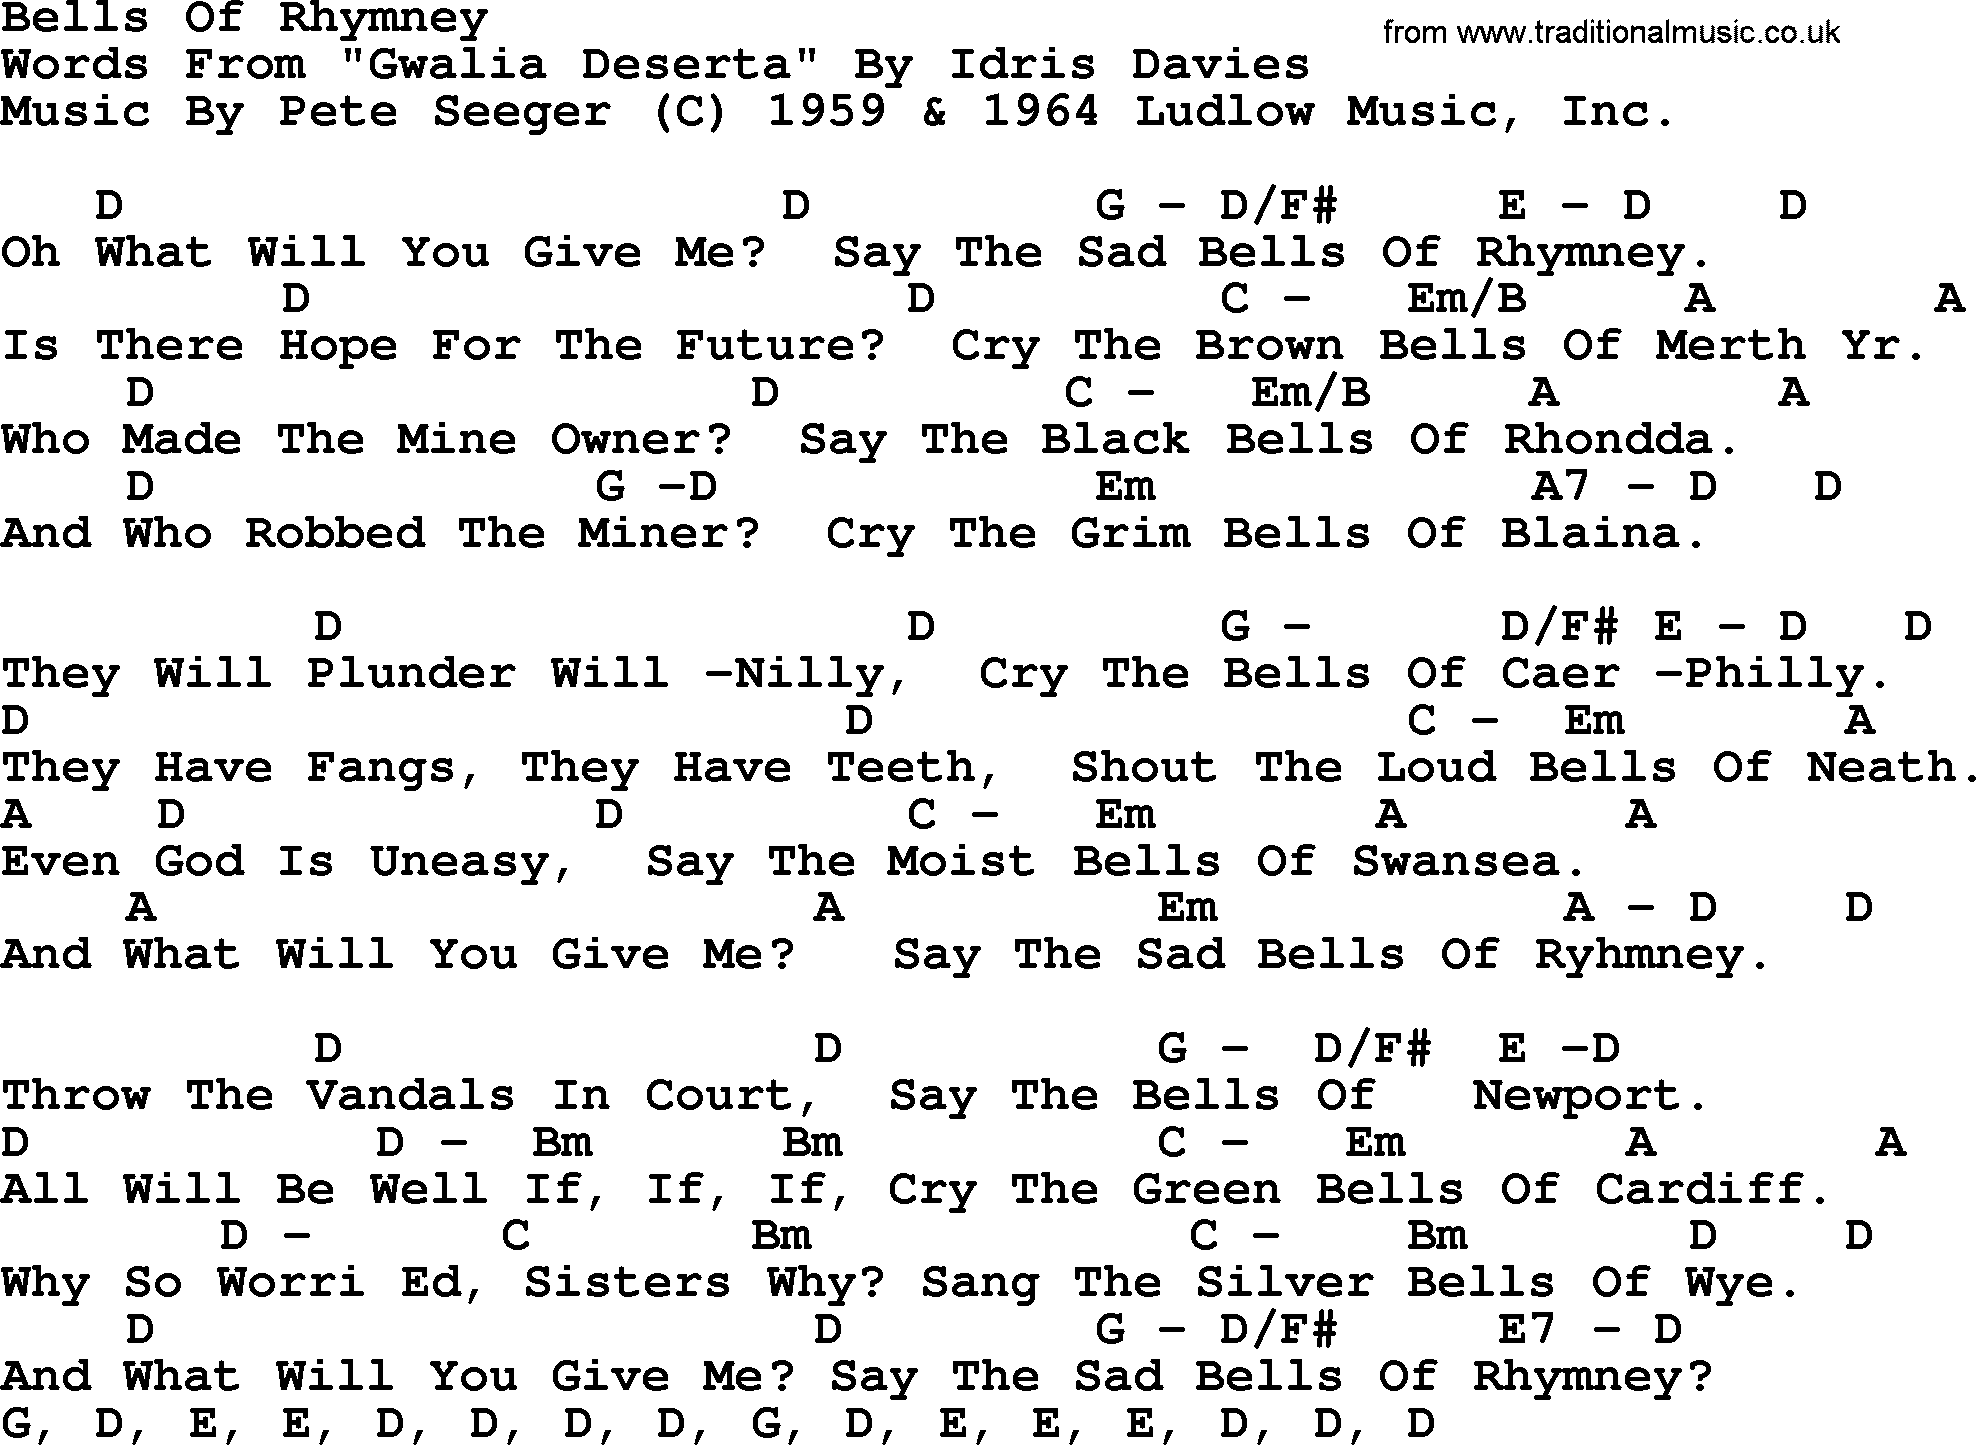 Pete Seeger song Bells Of Rhymney, lyrics and chords